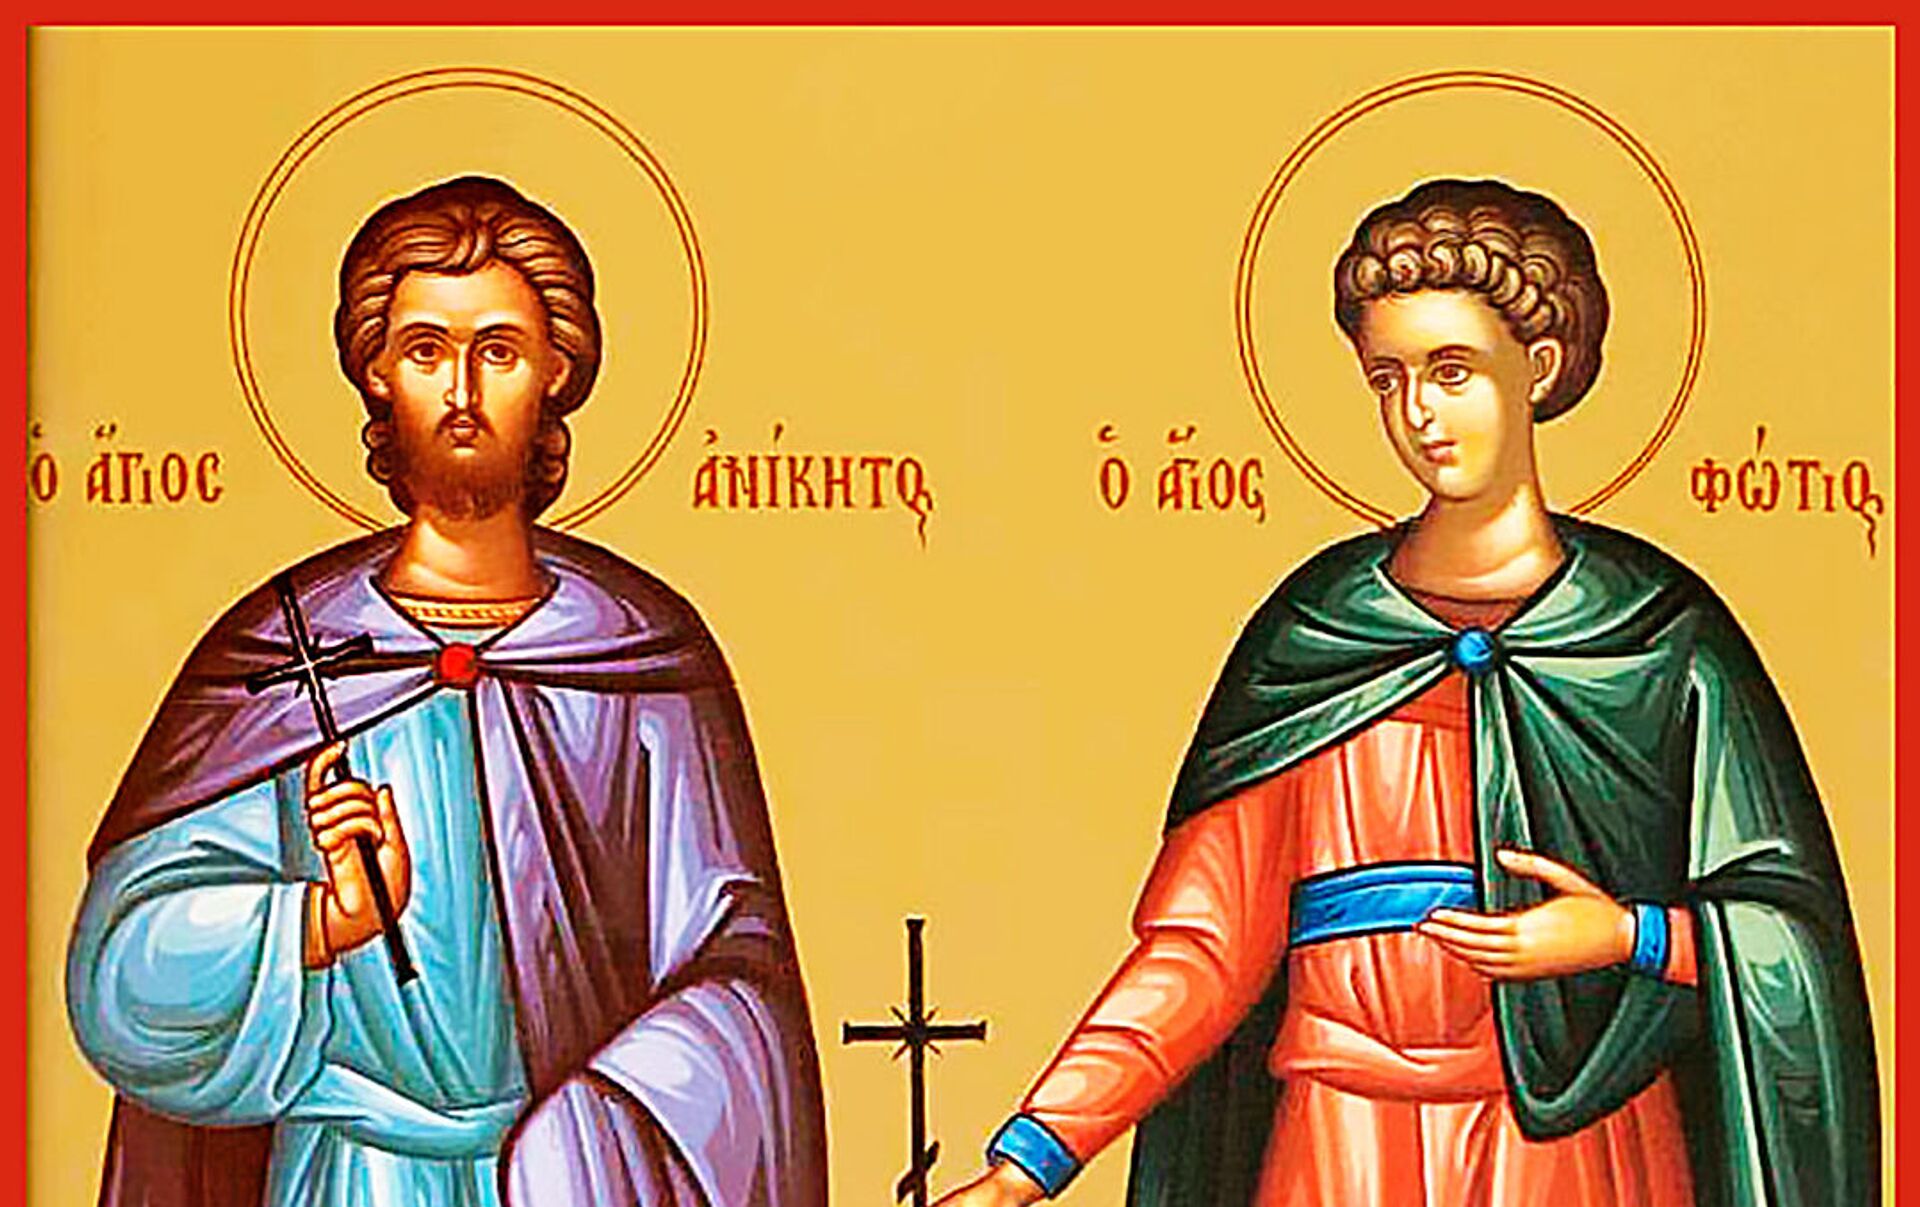 25 августа 2019 год. Святой мученик Аникита. Св. Фотий и Аникита. Фотий и Аникита икона. Святой мученик Фотий.